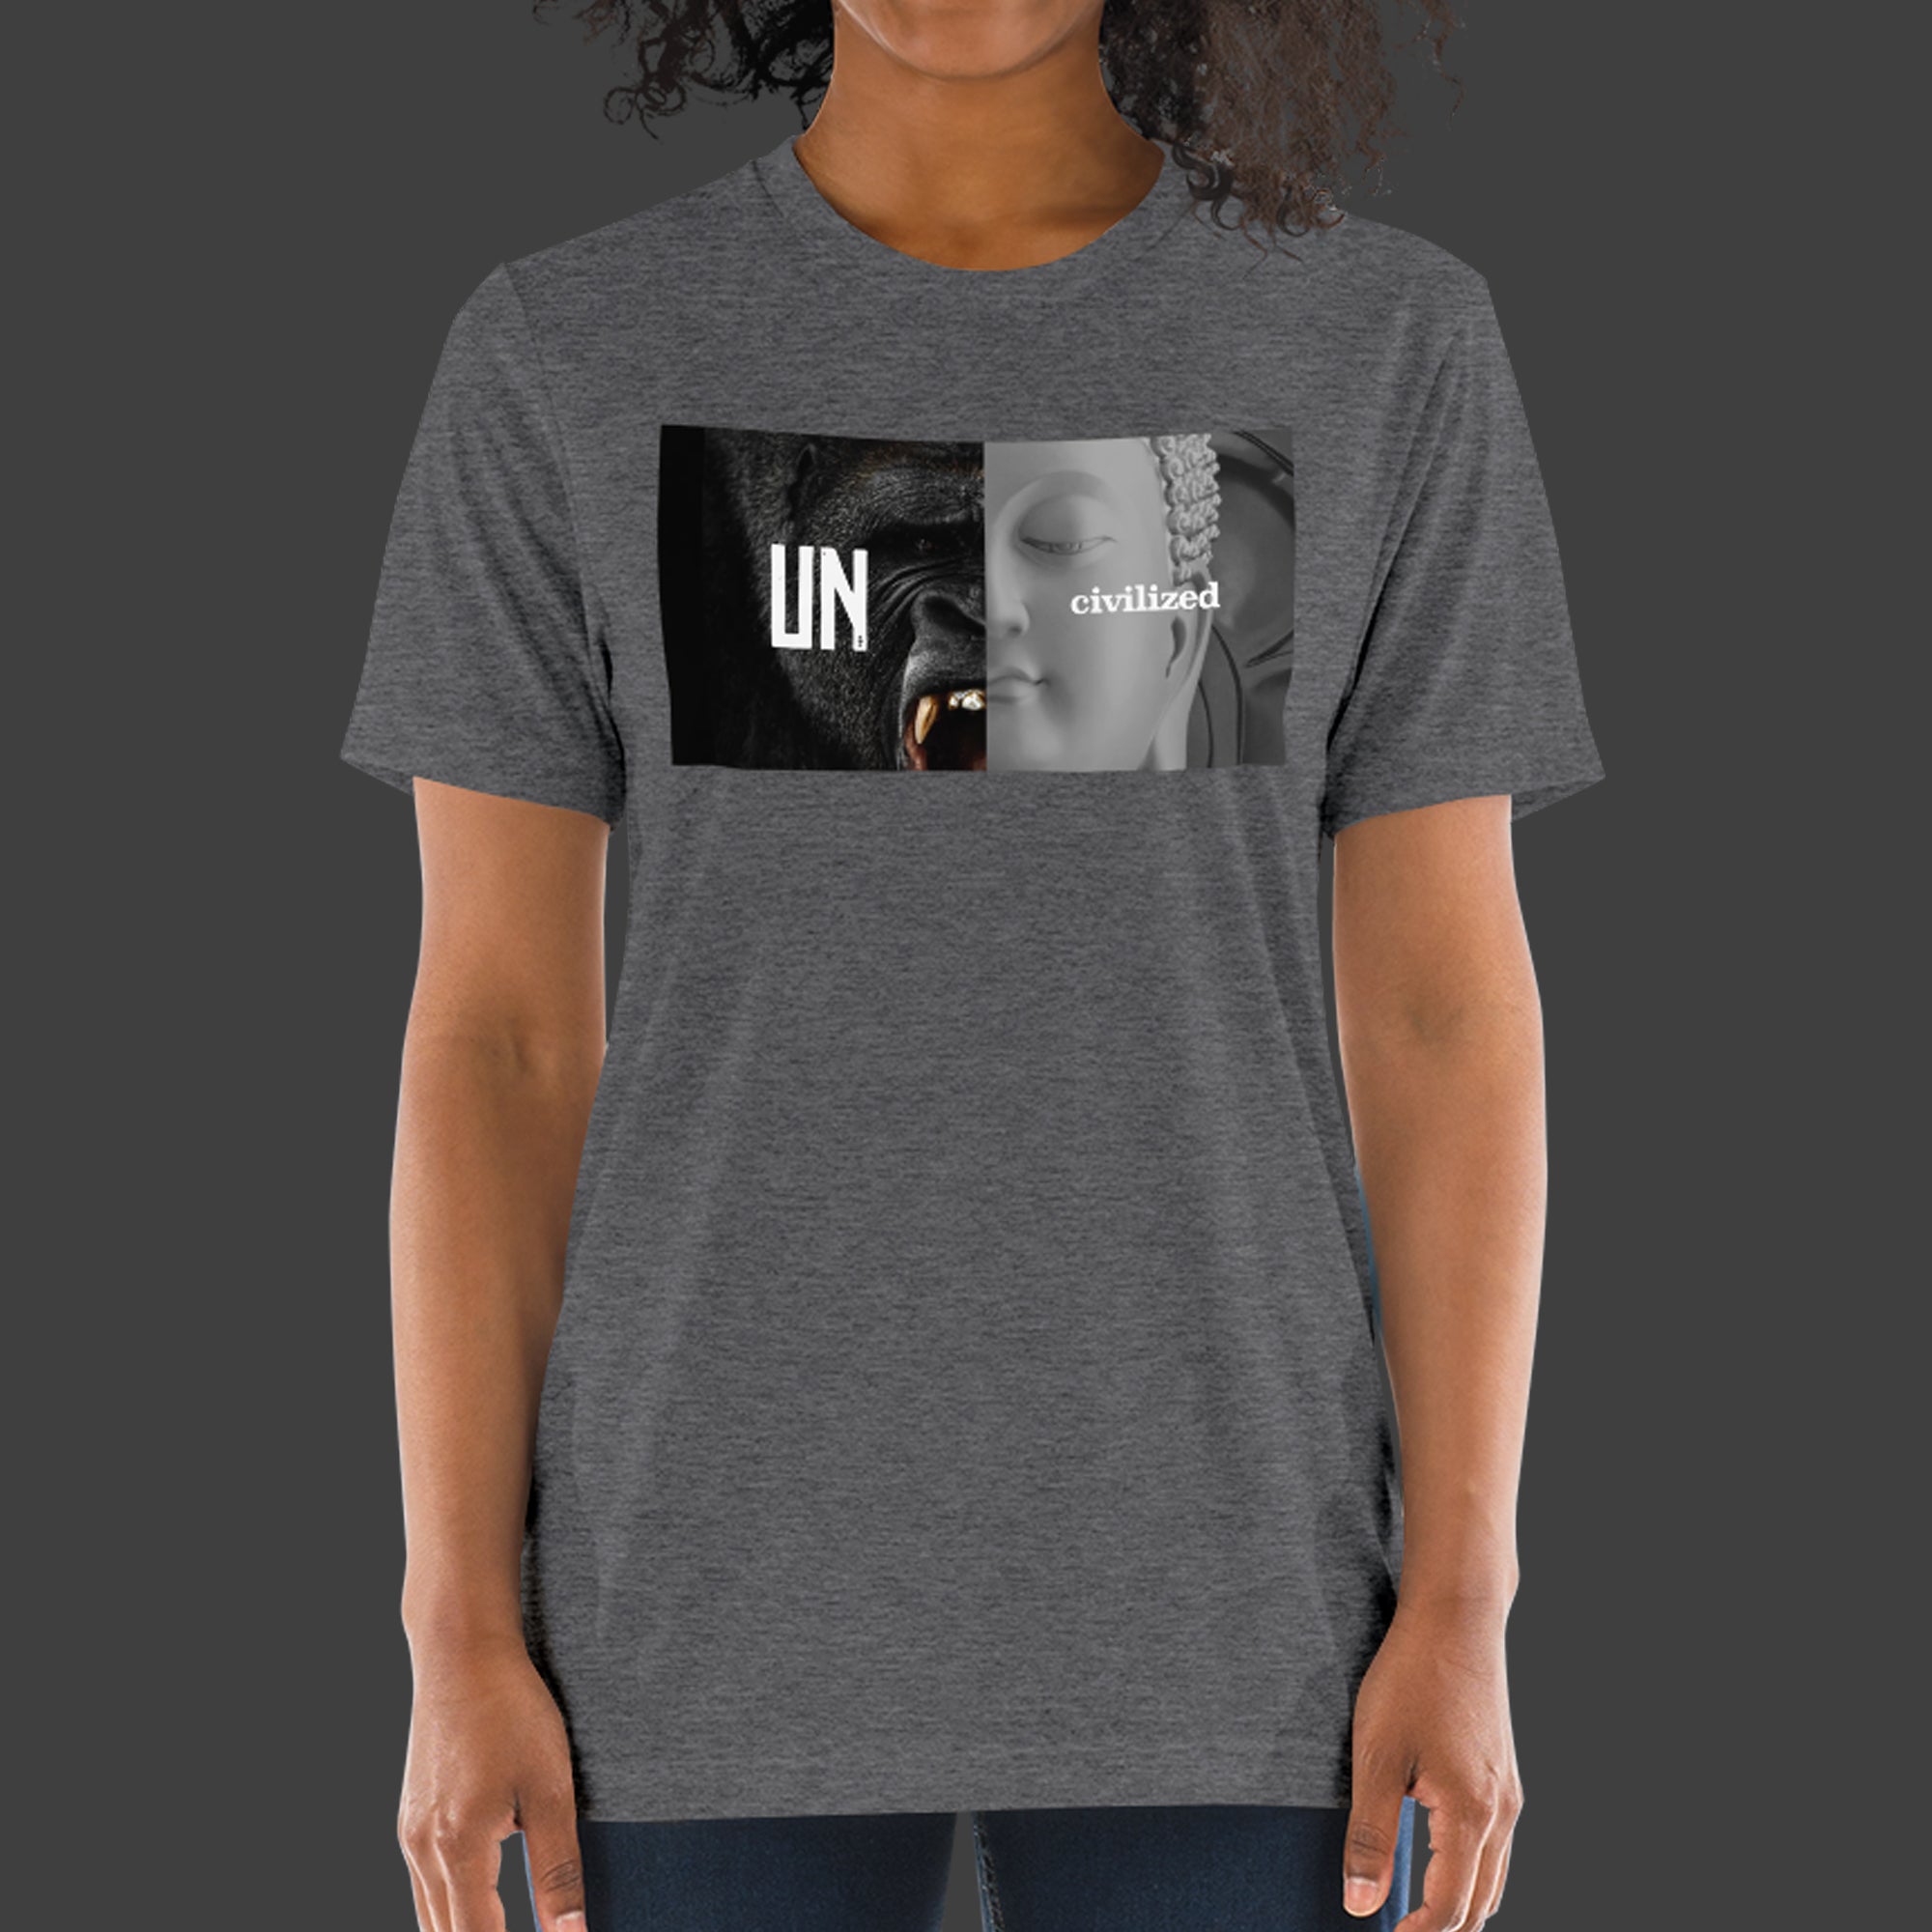 Uncivilized Gorilla / Buddha T-Shirt